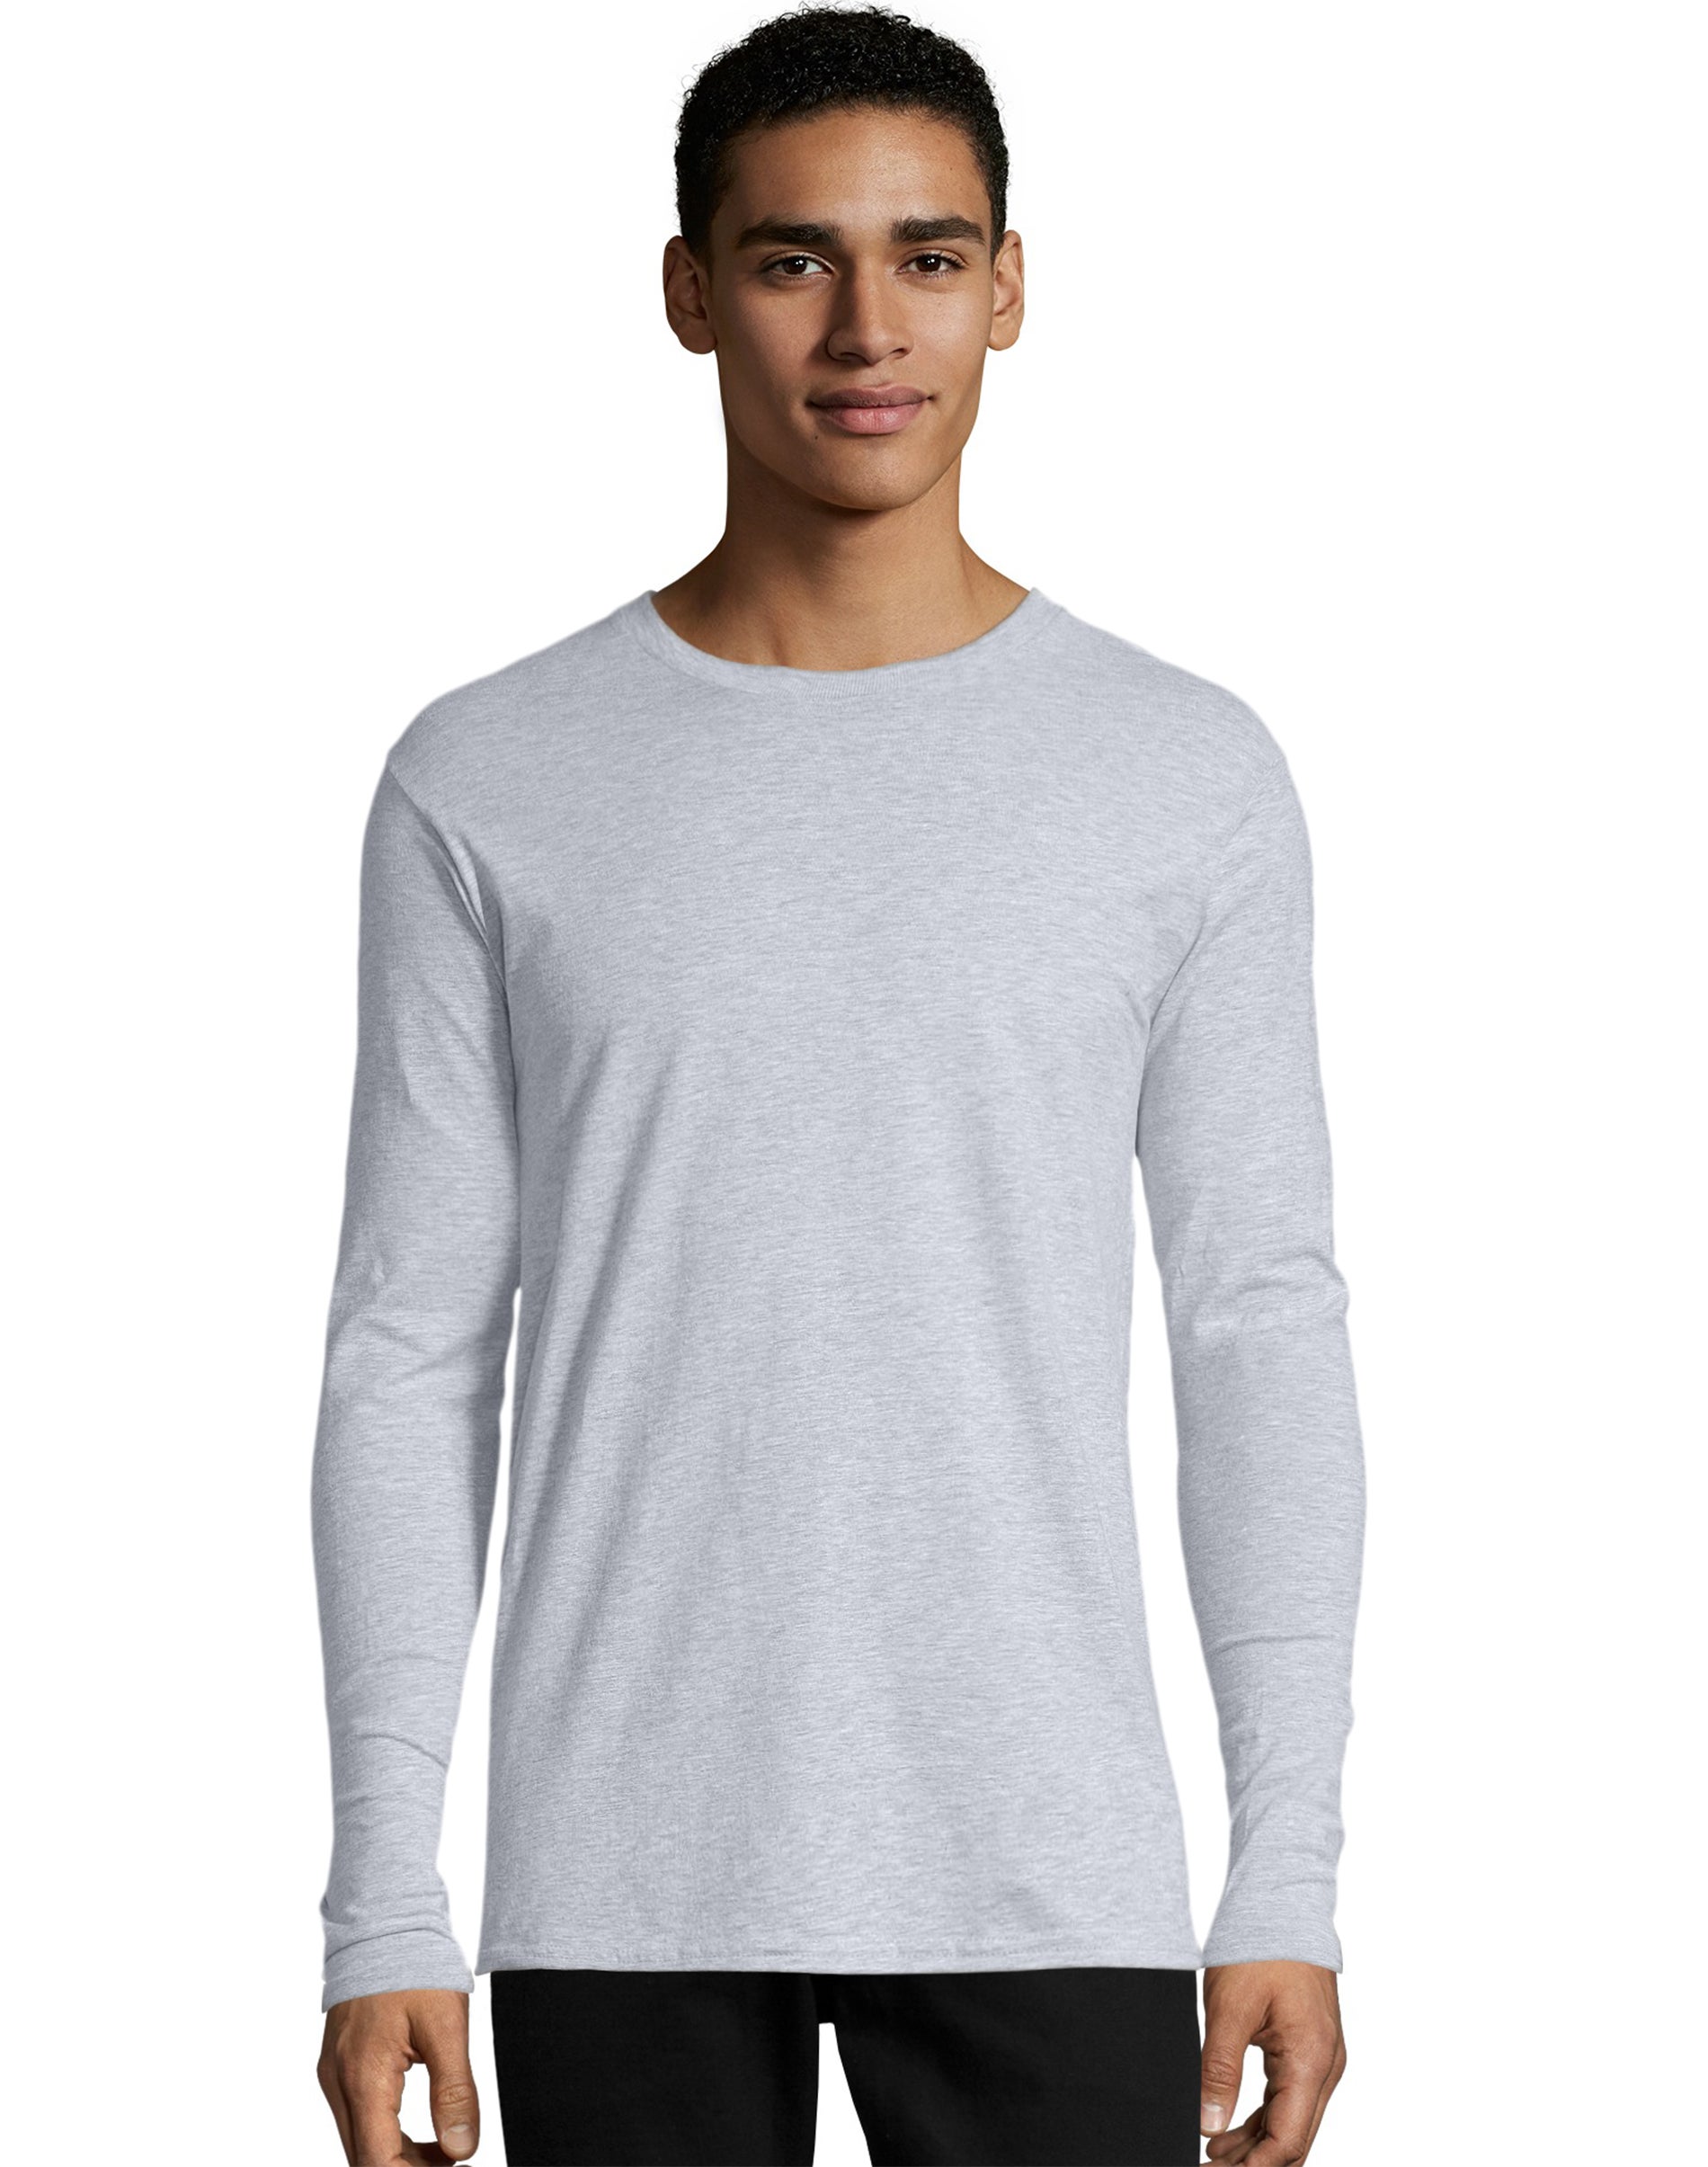 Hanes Men's Perfect-T Long Sleeve T-Shirt Ash S - image 1 of 8